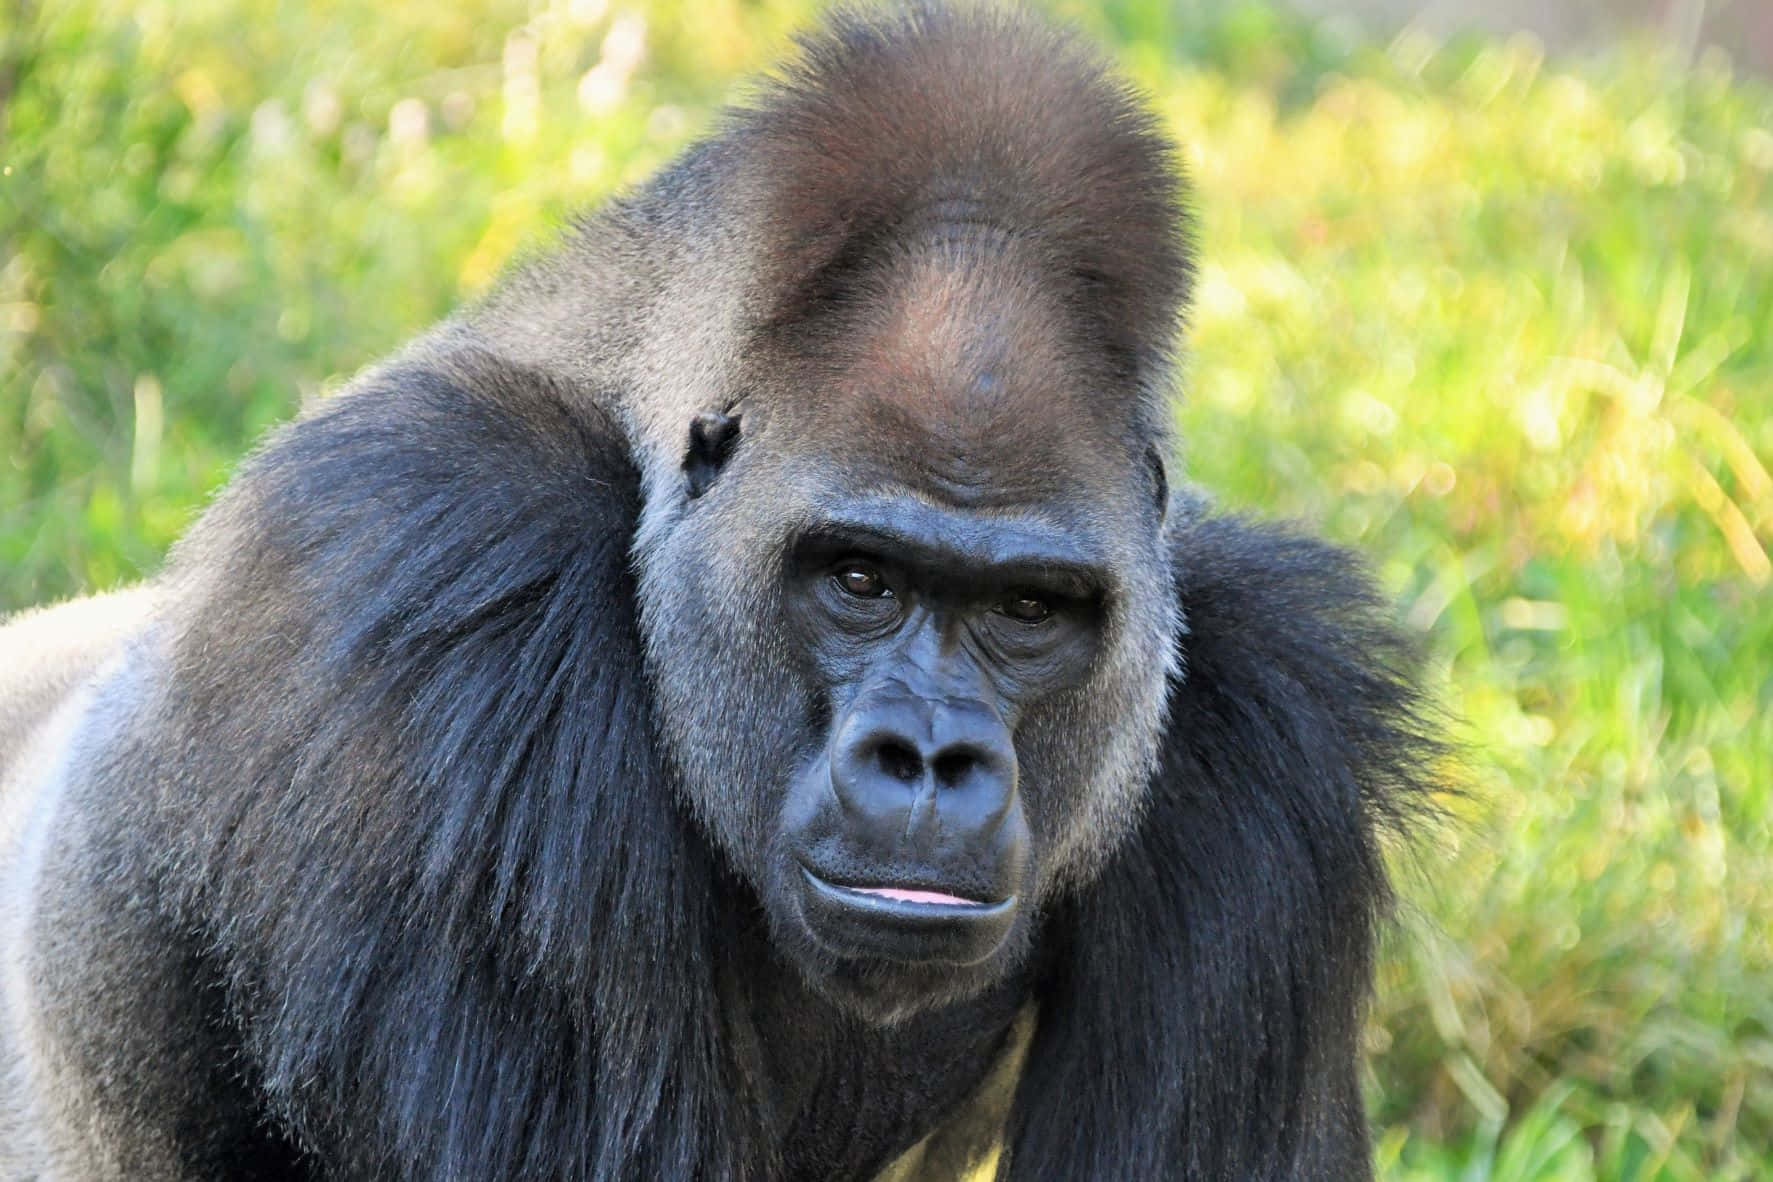 Unadorable Gorila Mira Curiosamente Al Espectador